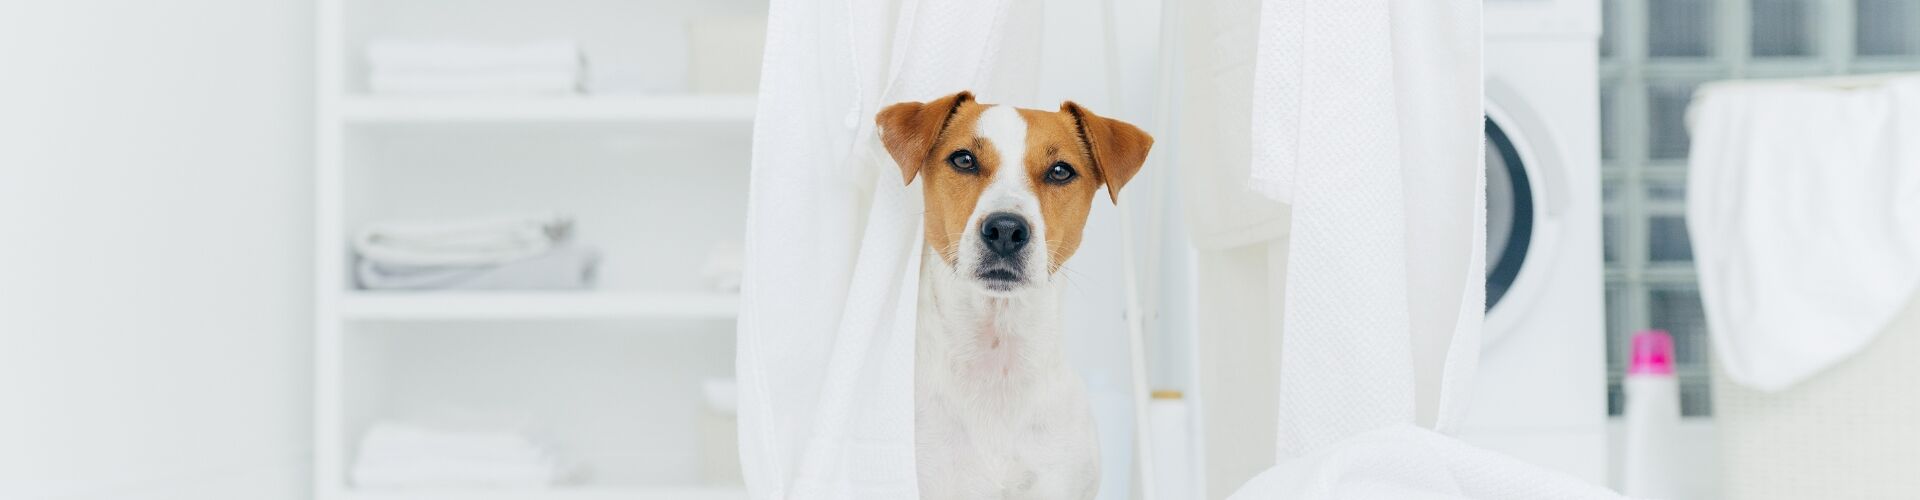 Raumreinigung Sterilisation Hund Hundesalon